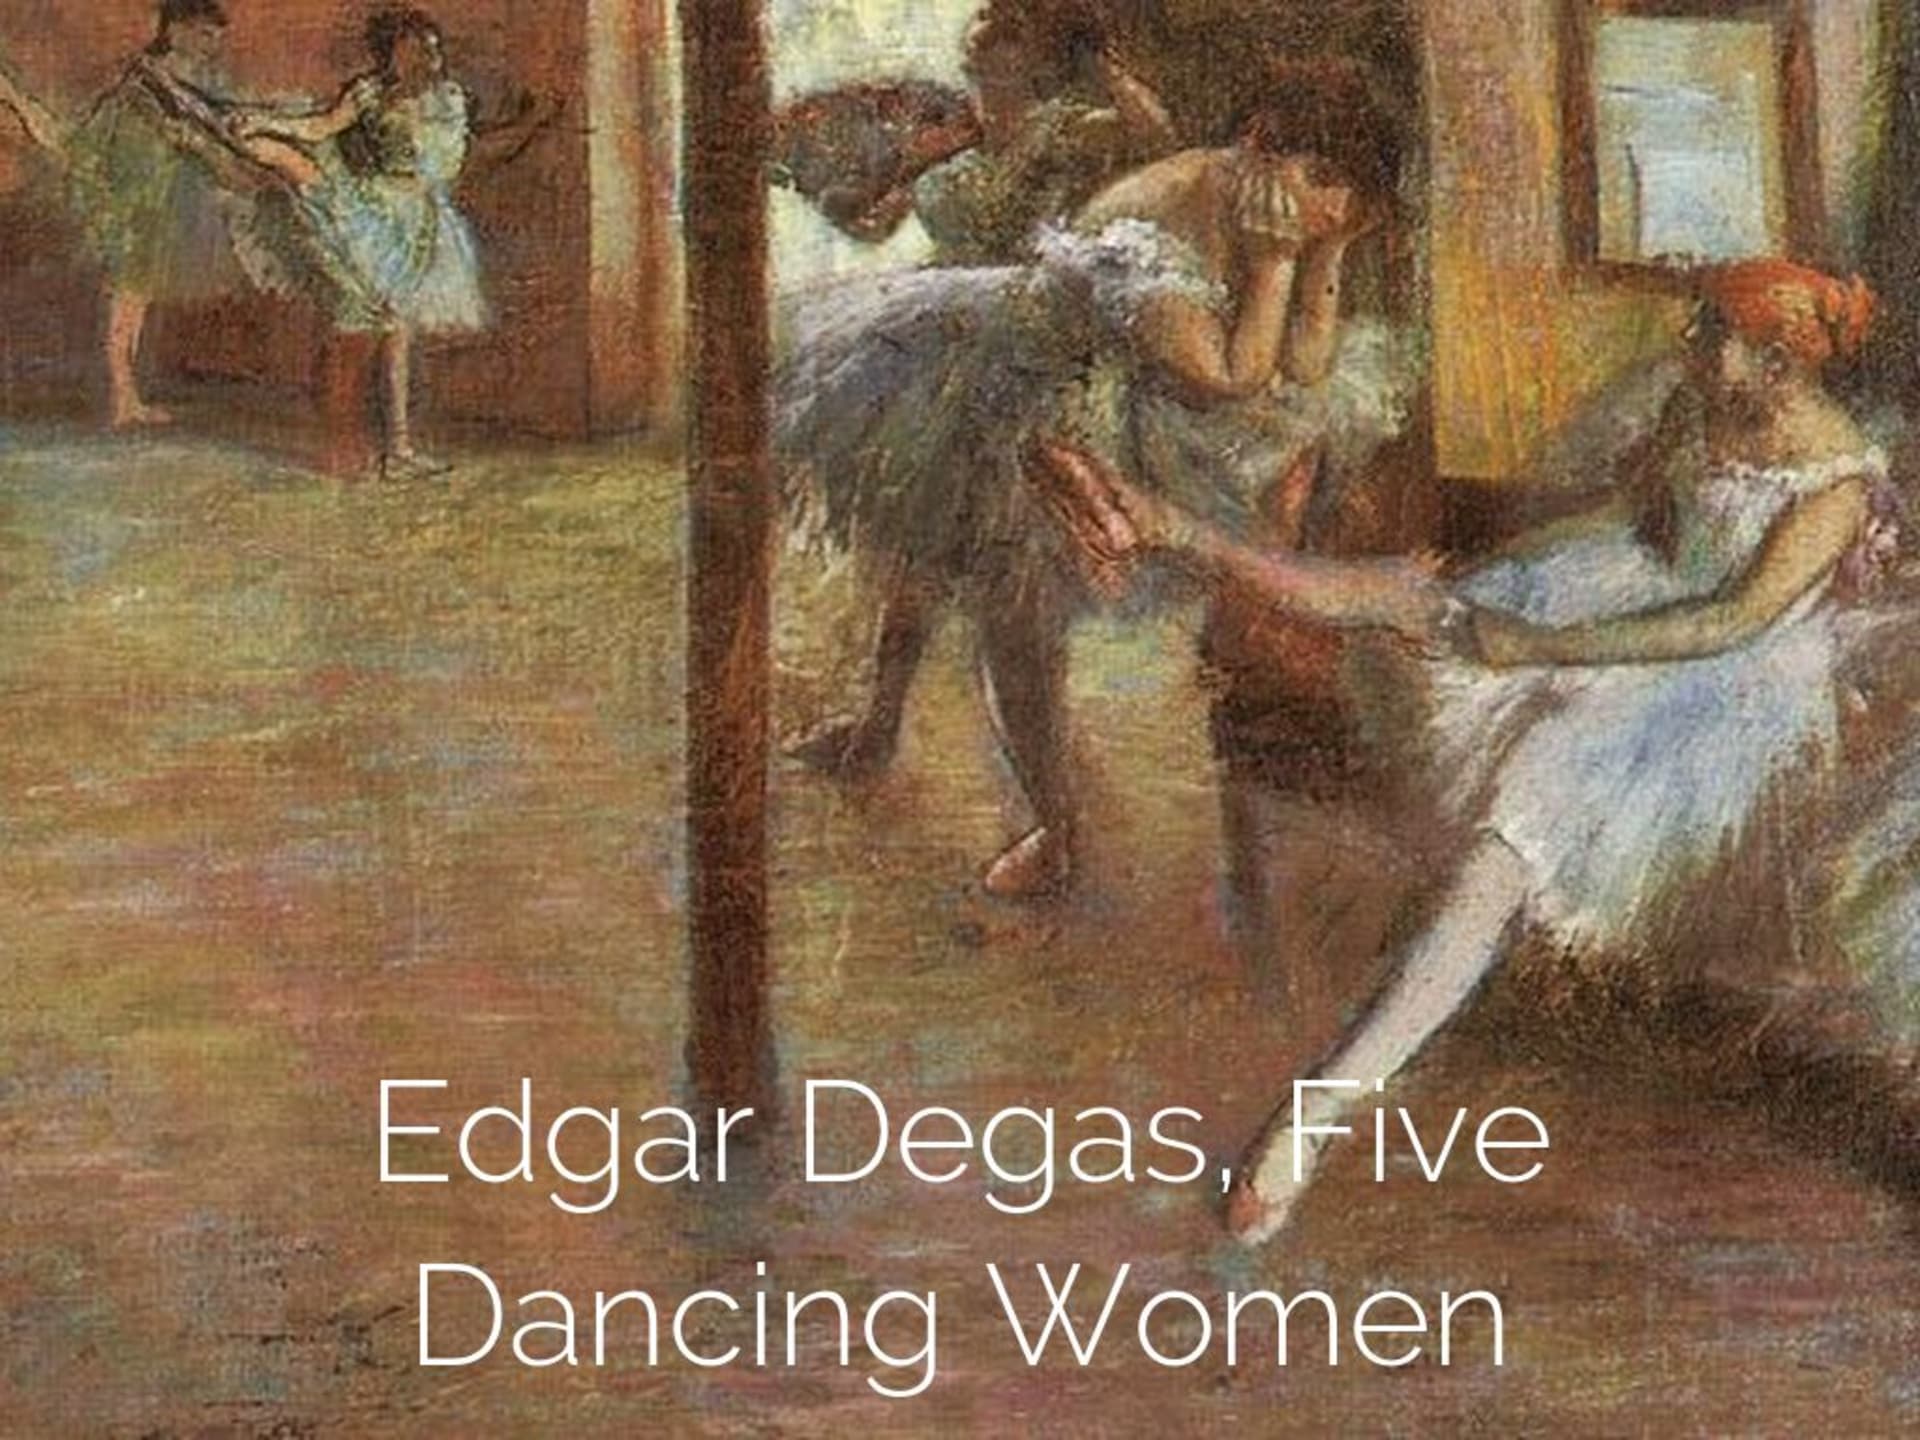 Five dancing woman